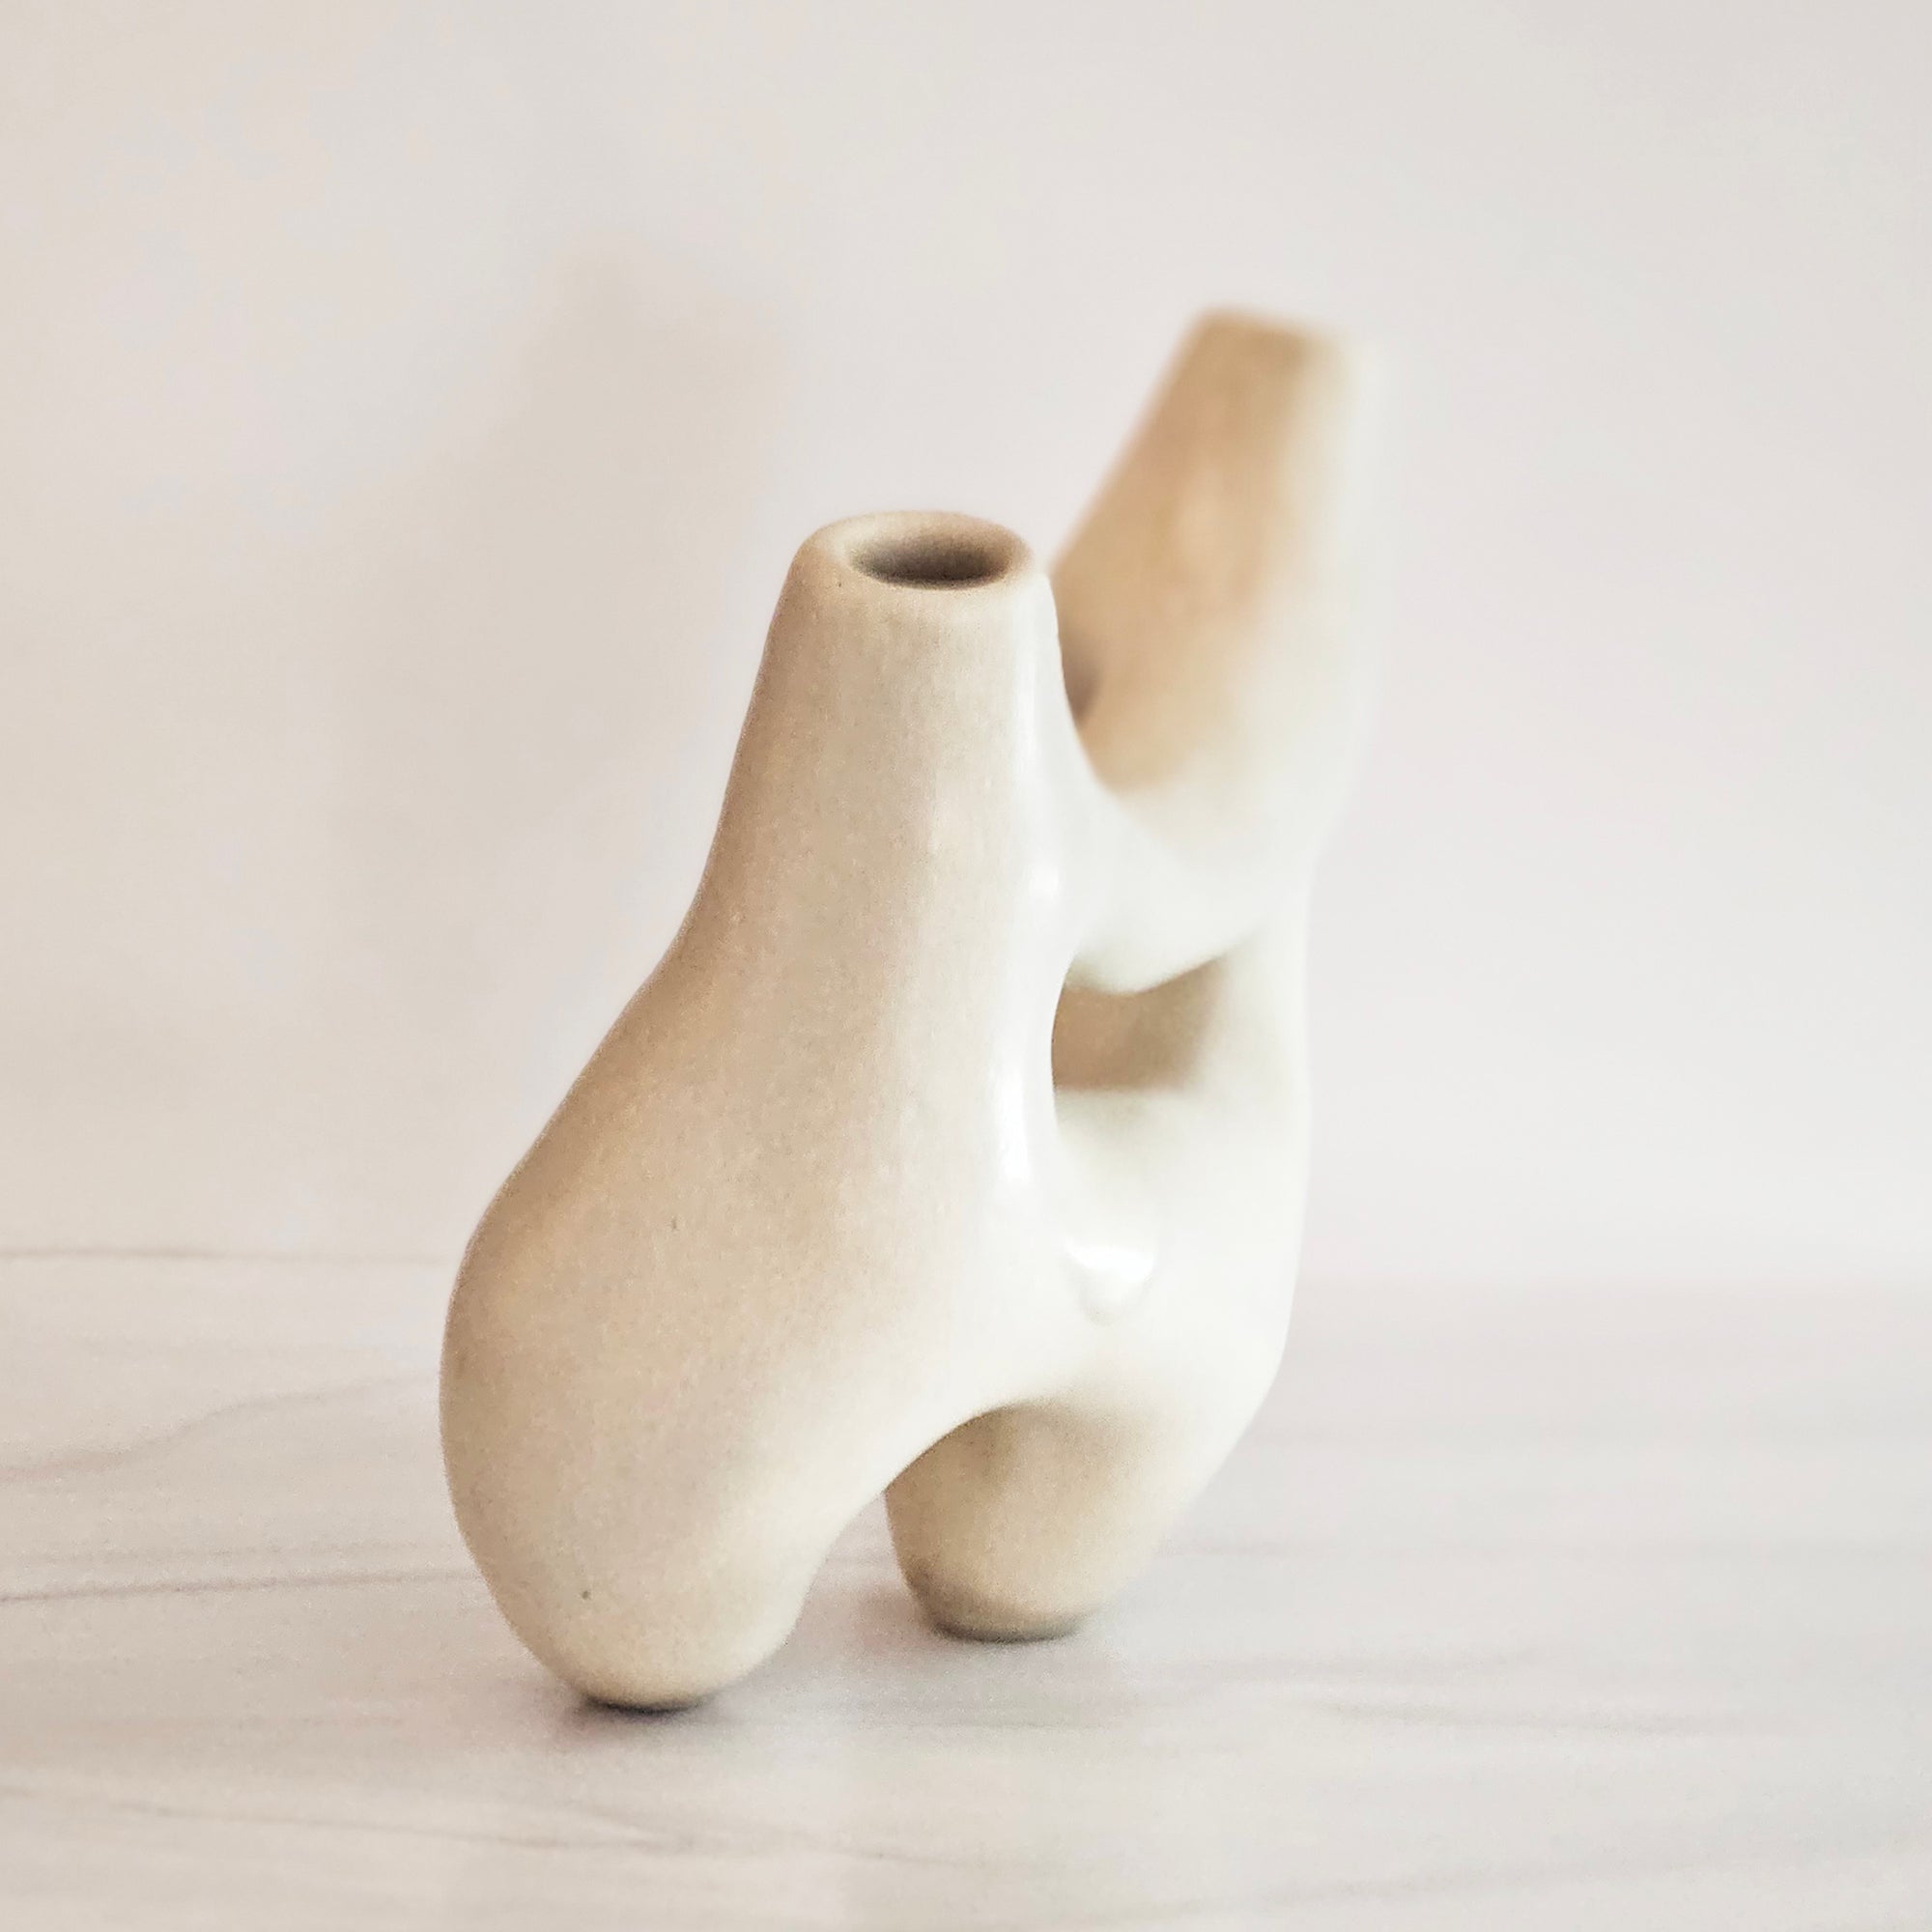 natural organic shape vase